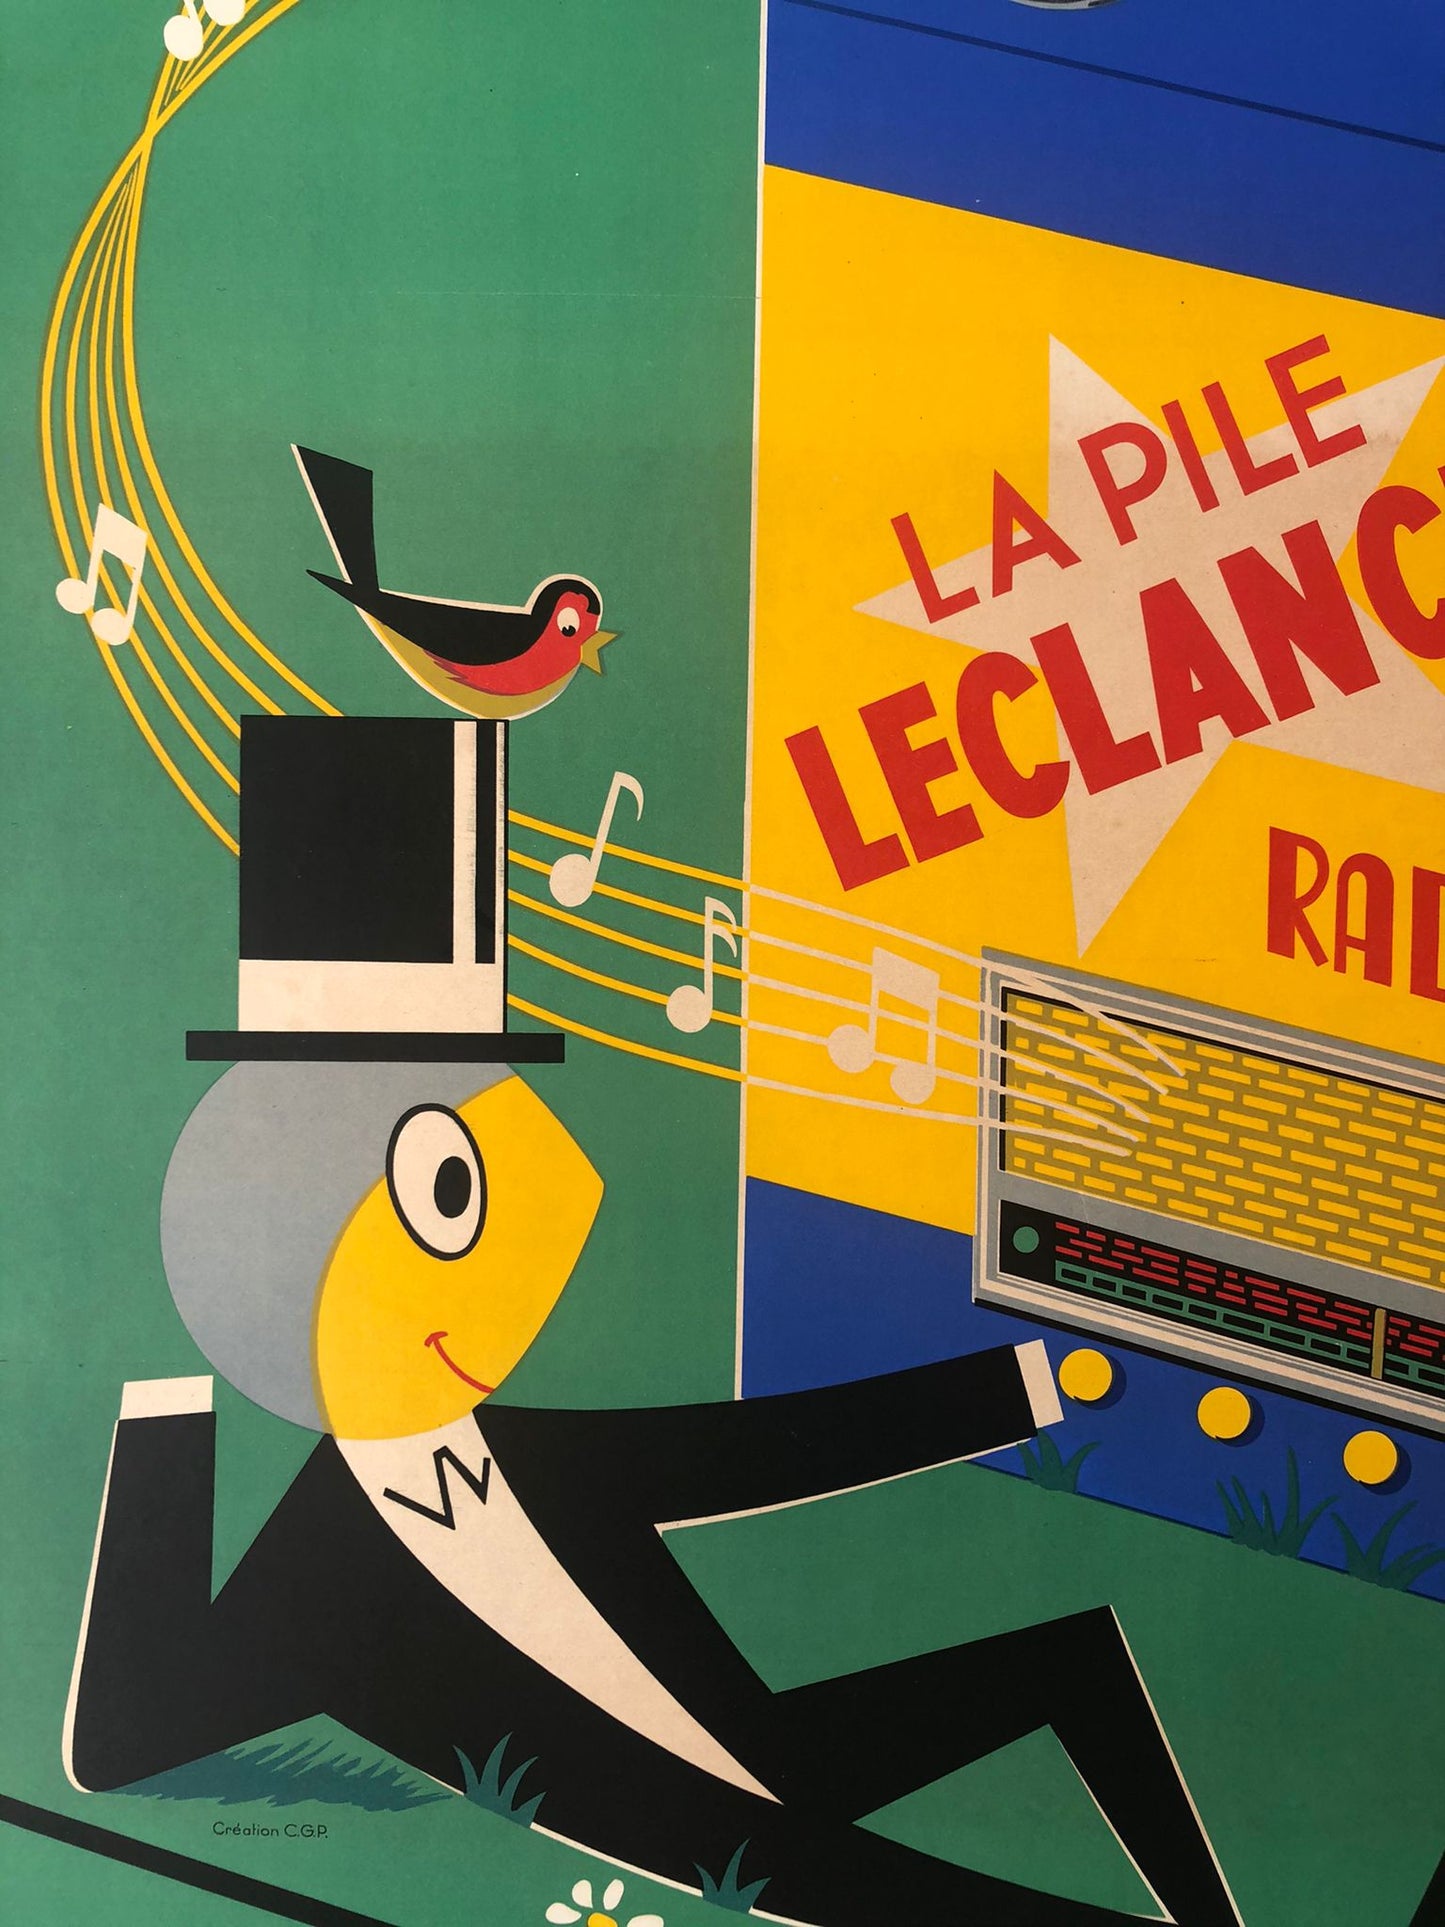 "La Pile Leclanche" Electric Battery Advertisement by Cotto